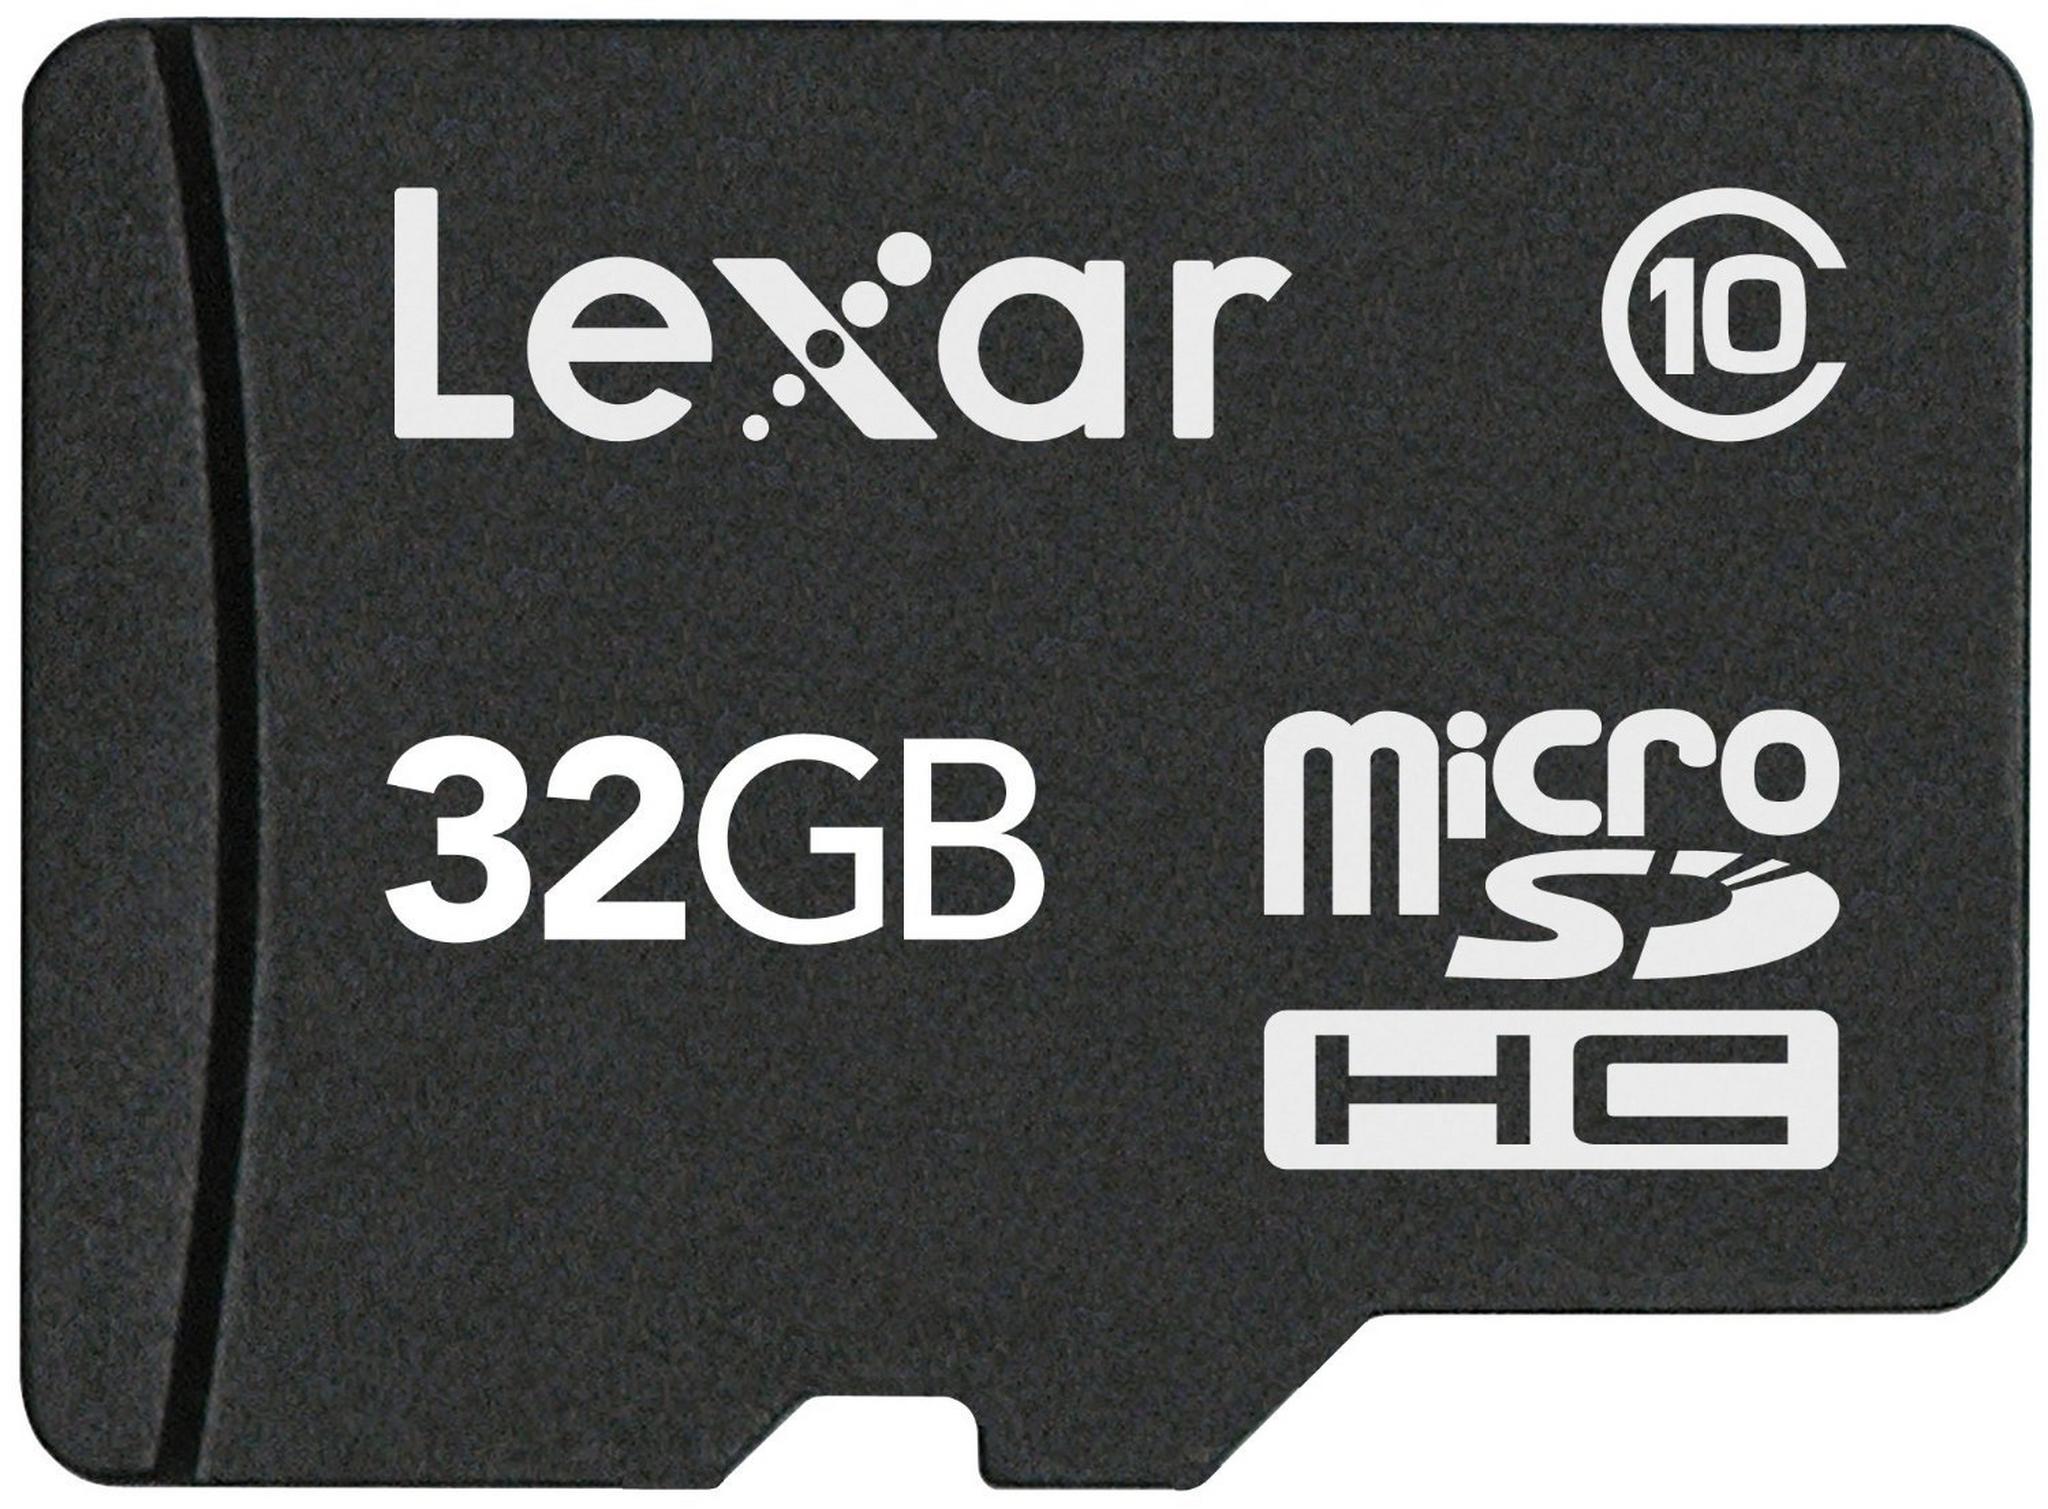 Lexar 32GB MicroSDHC Class 10 Memory Card